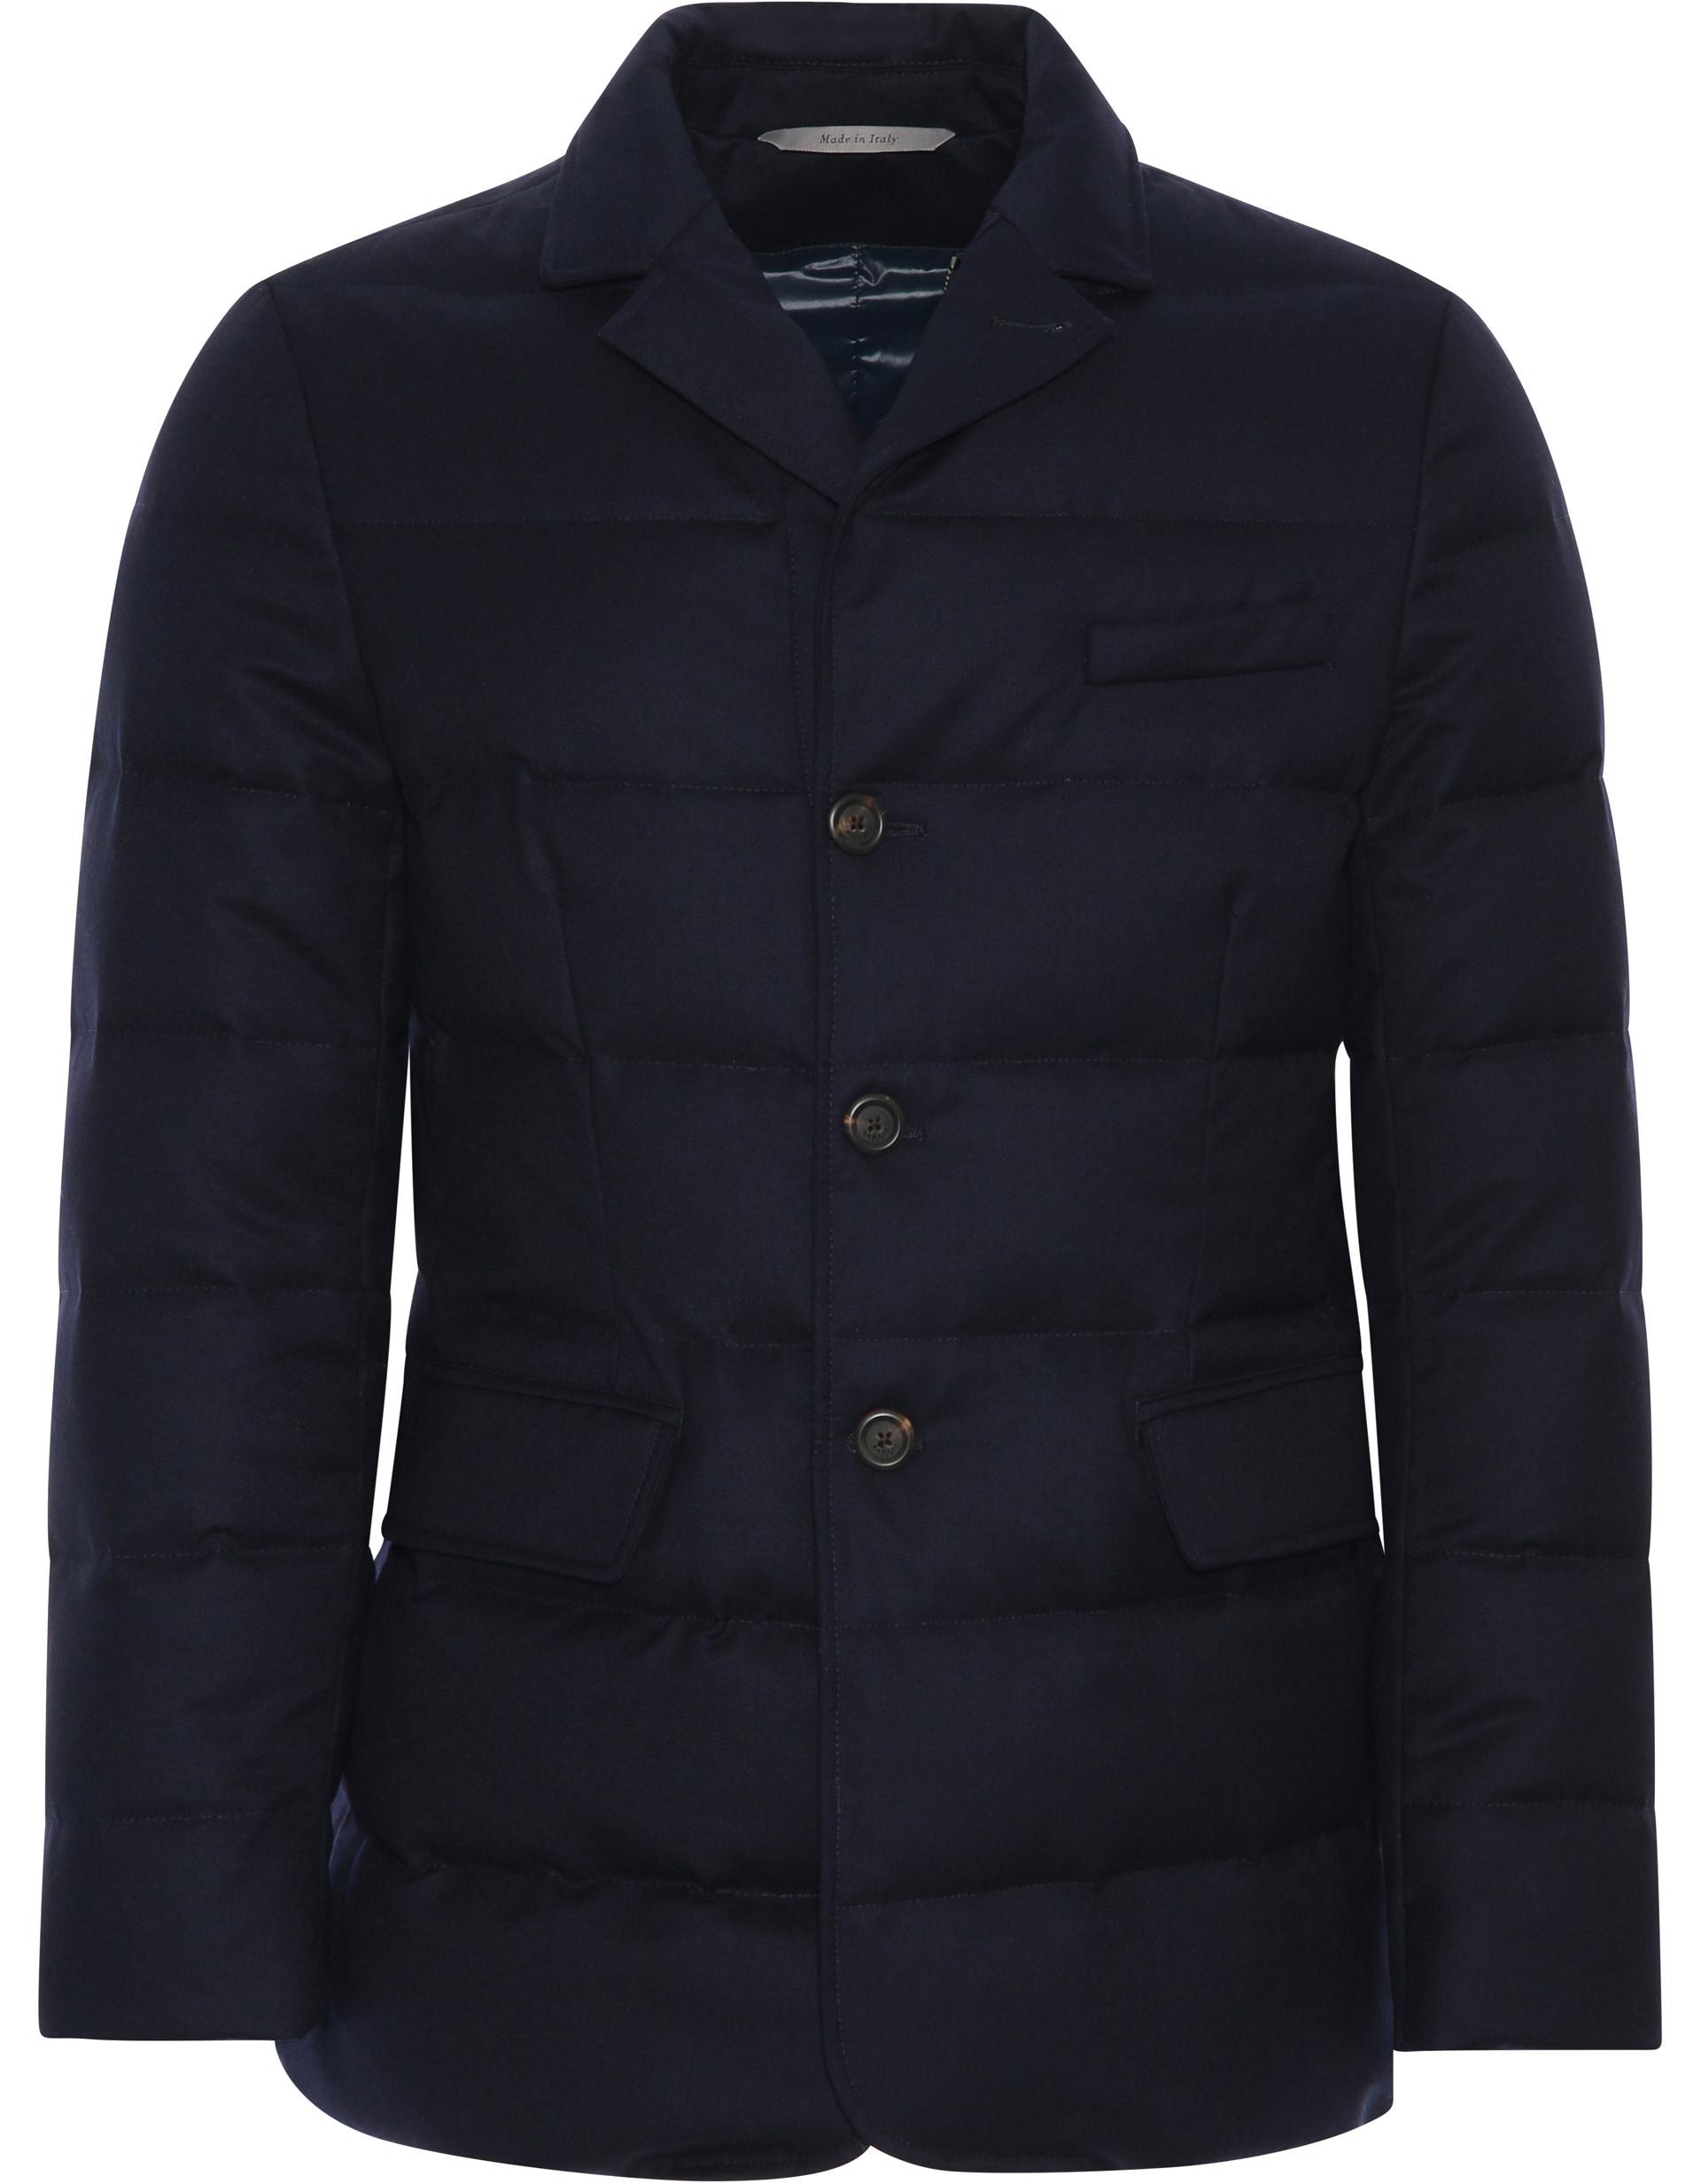 Canali Wool Navy Blue Puffer Rain Jacket for Men - Lyst